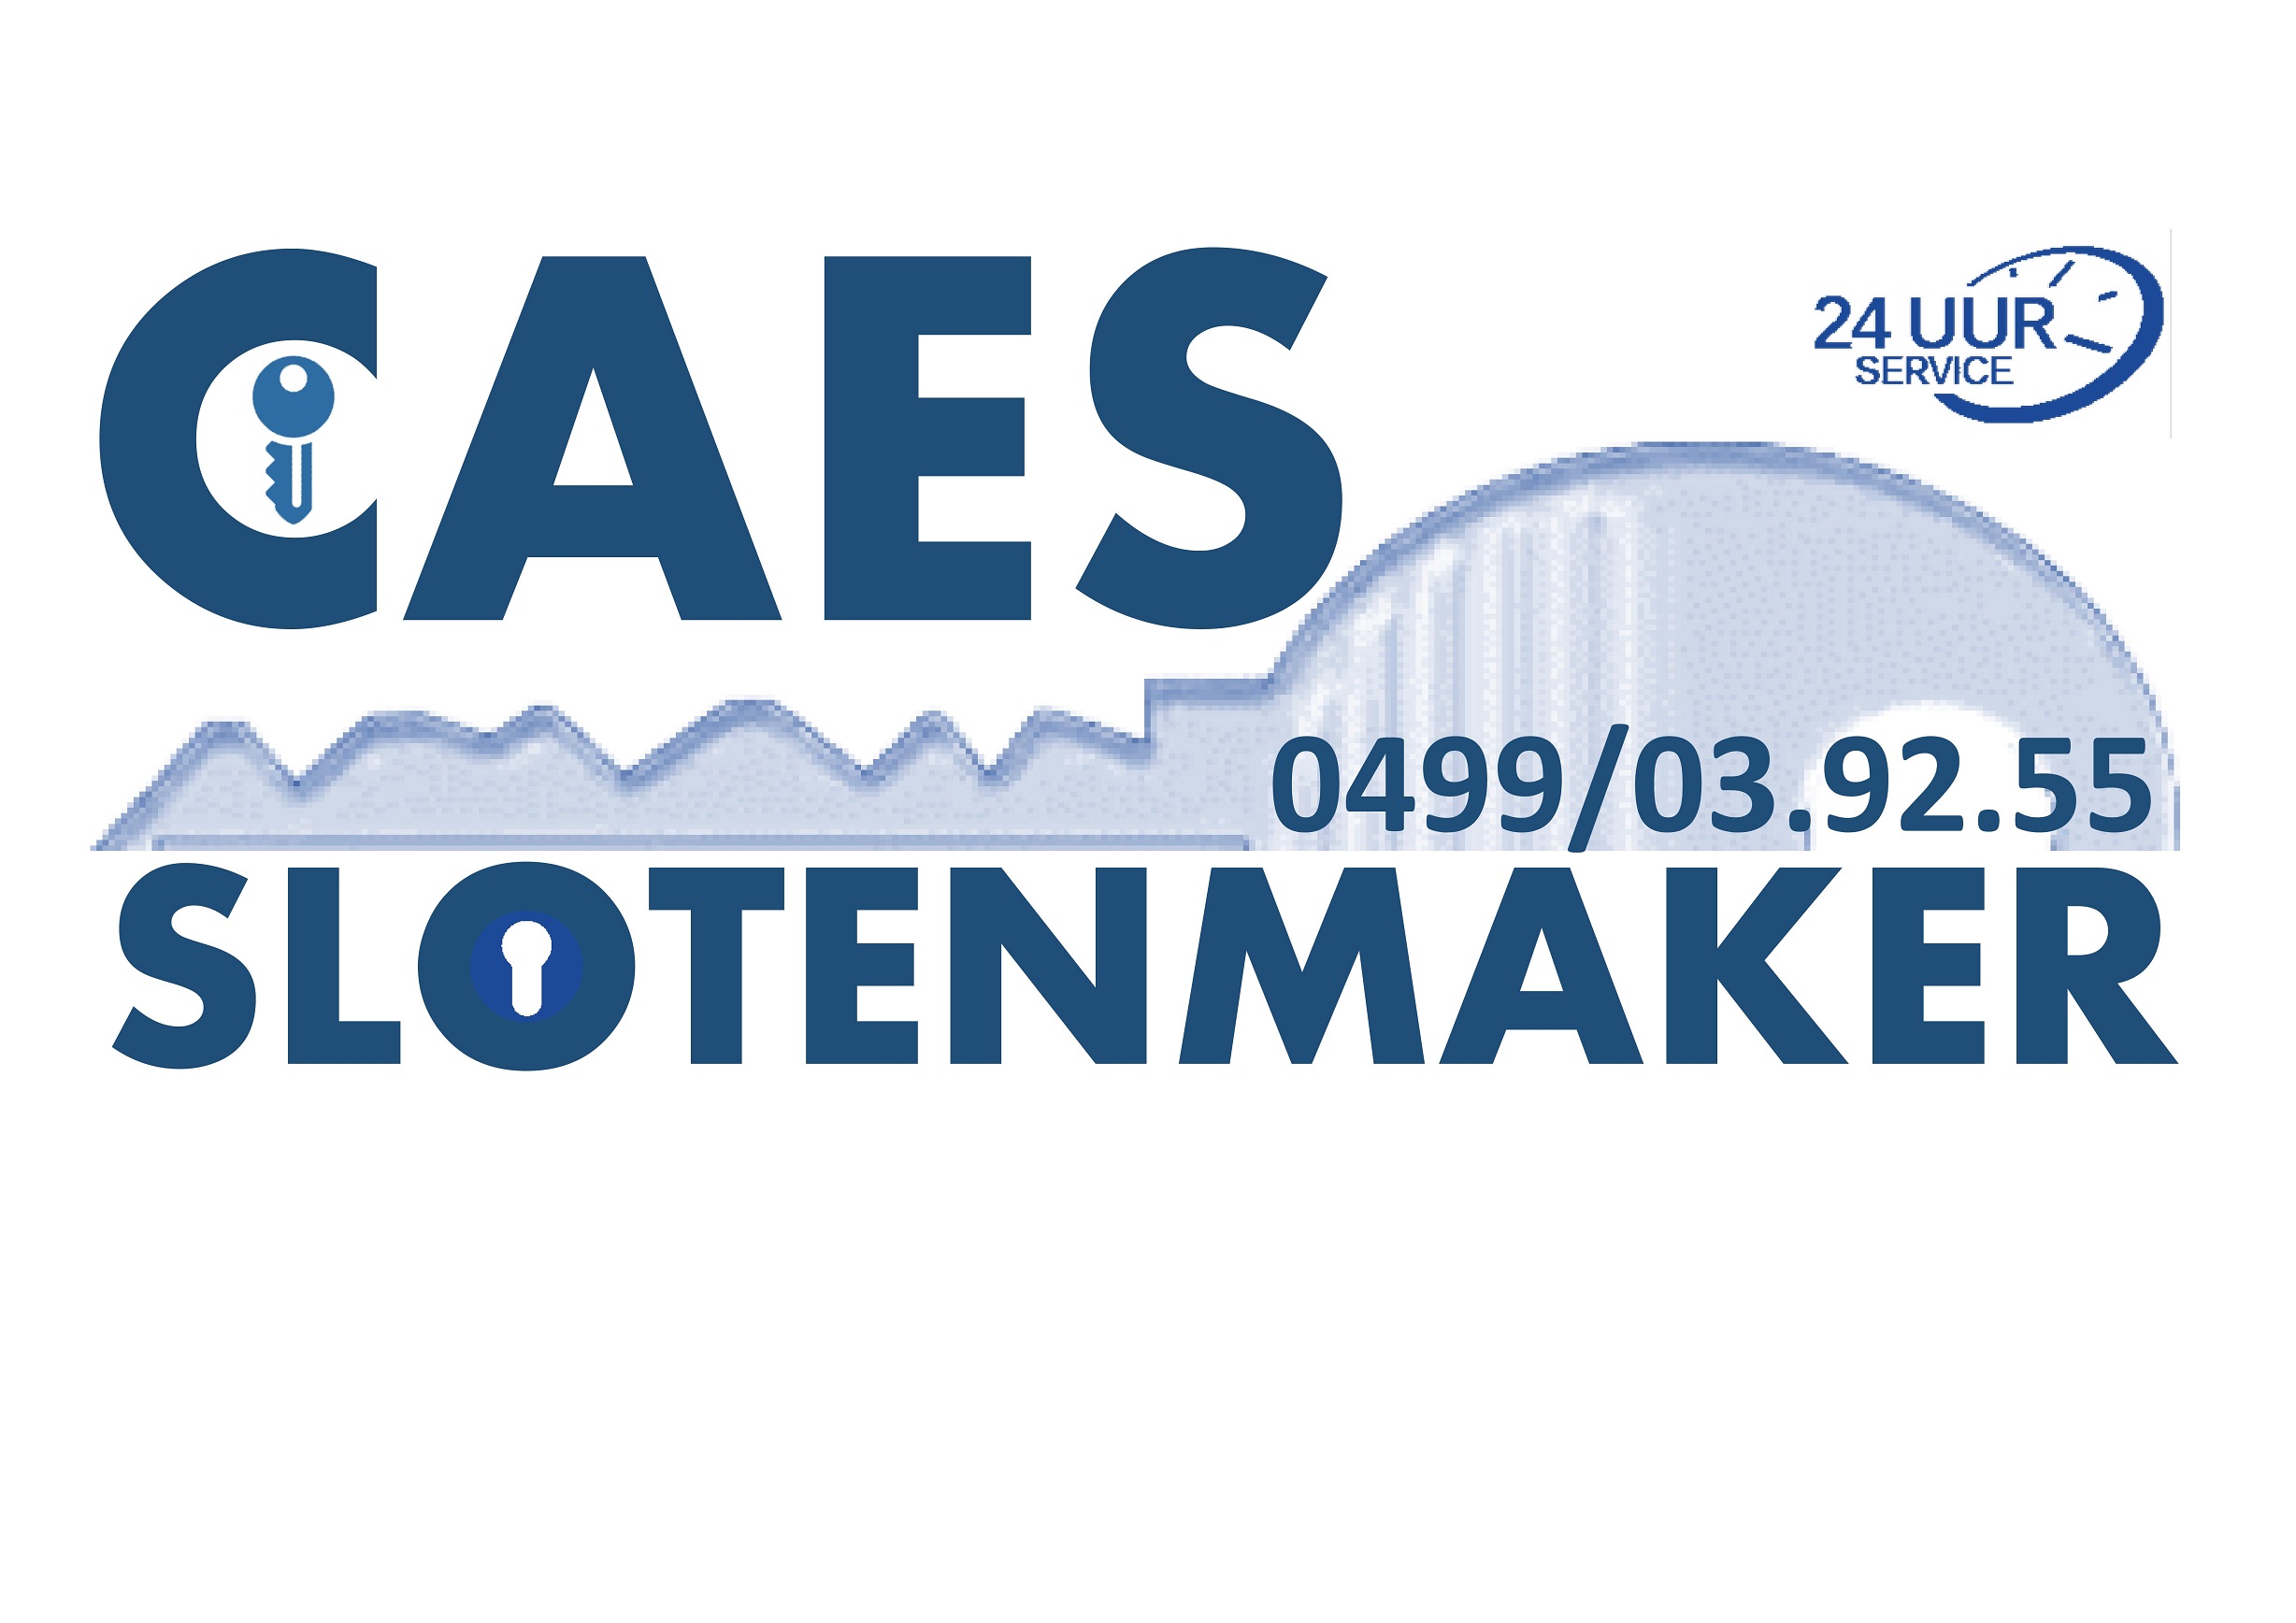 slotenmakers Waregem | Slotenmakerij Caes